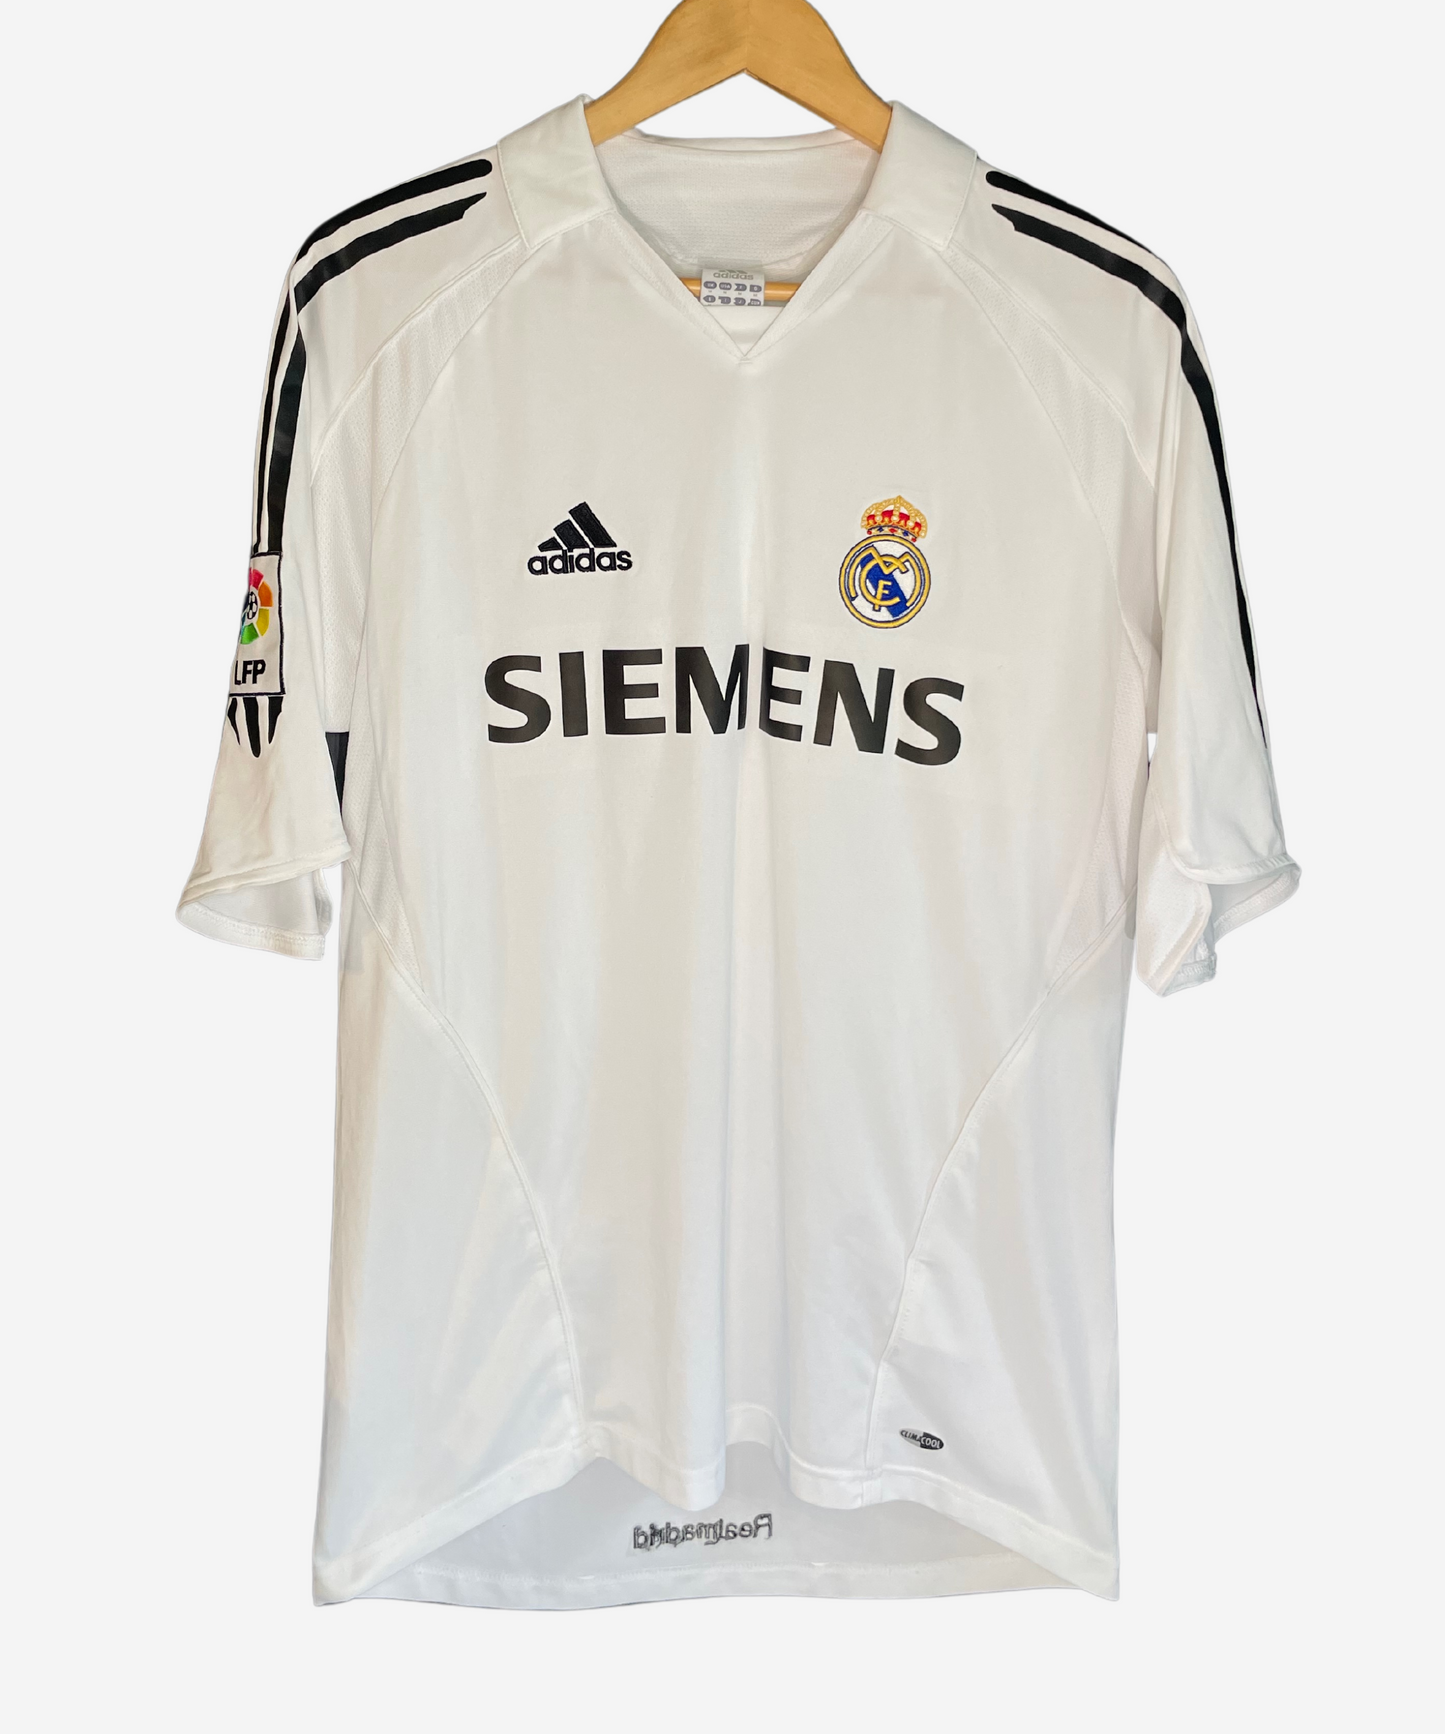 Real Madrid FC 2005/06 Robinho Home Kit (M)